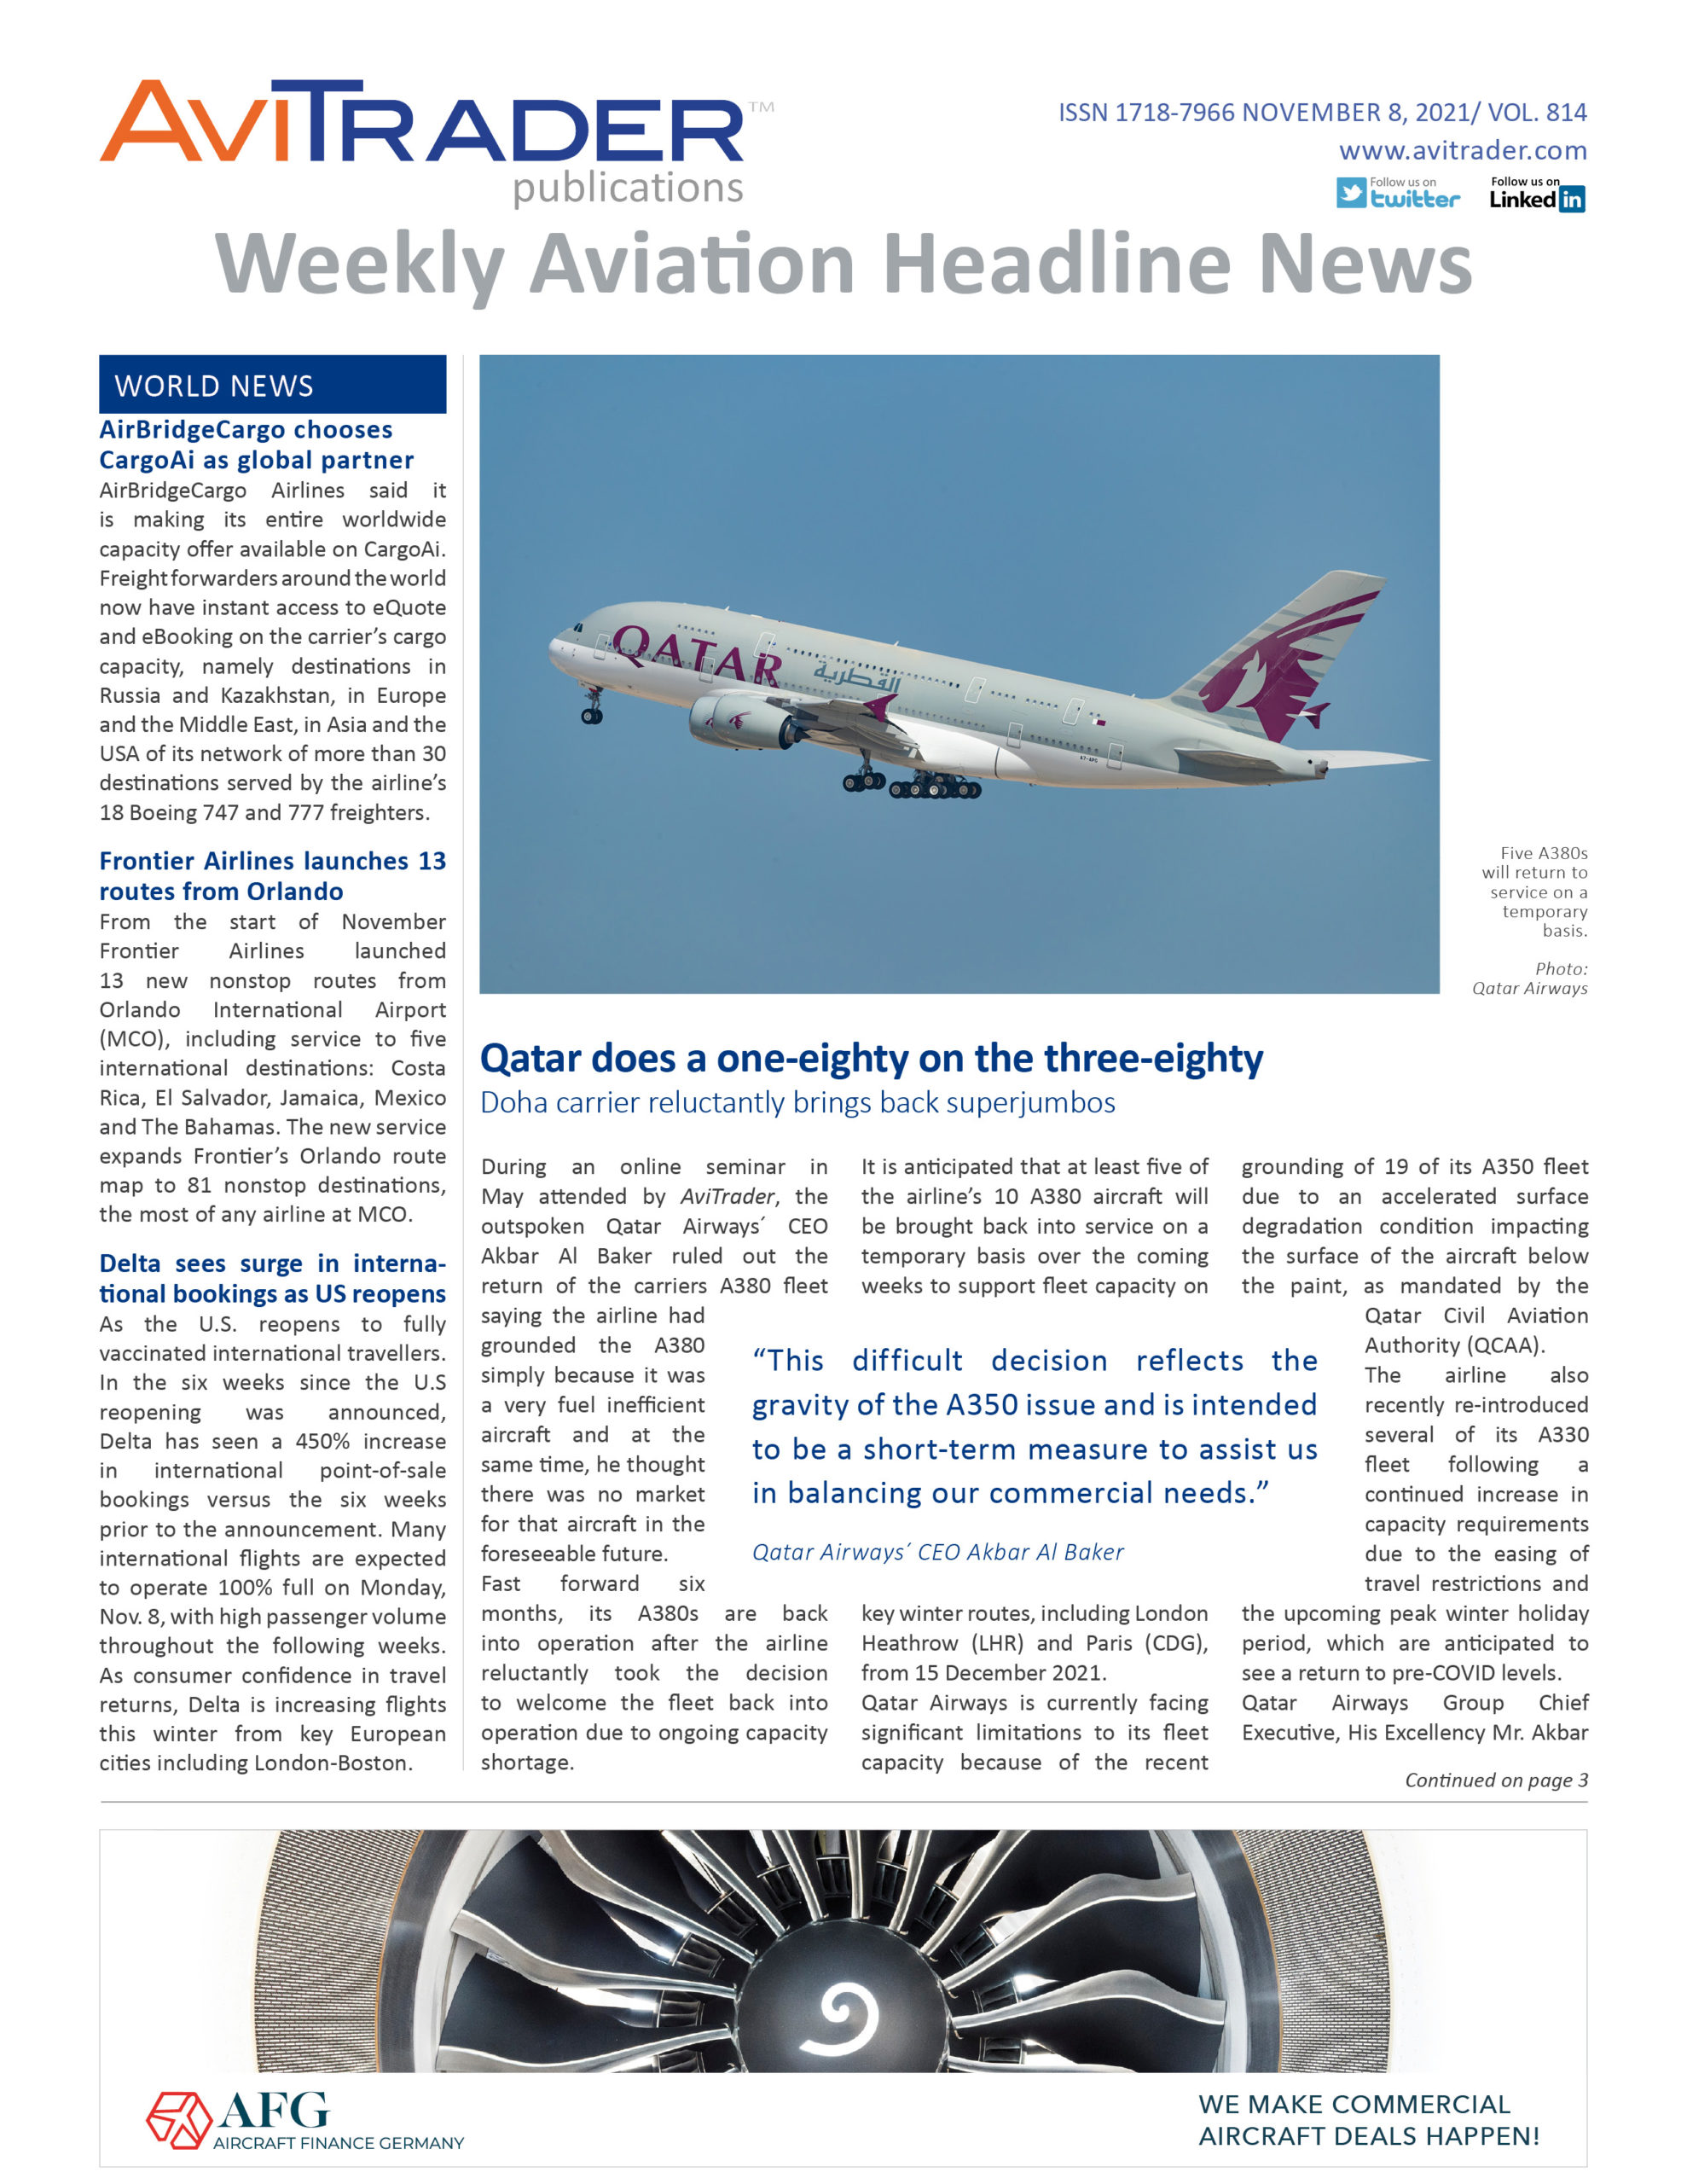 AviTrader_Weekly_Headline_News_Cover_2021-11-08